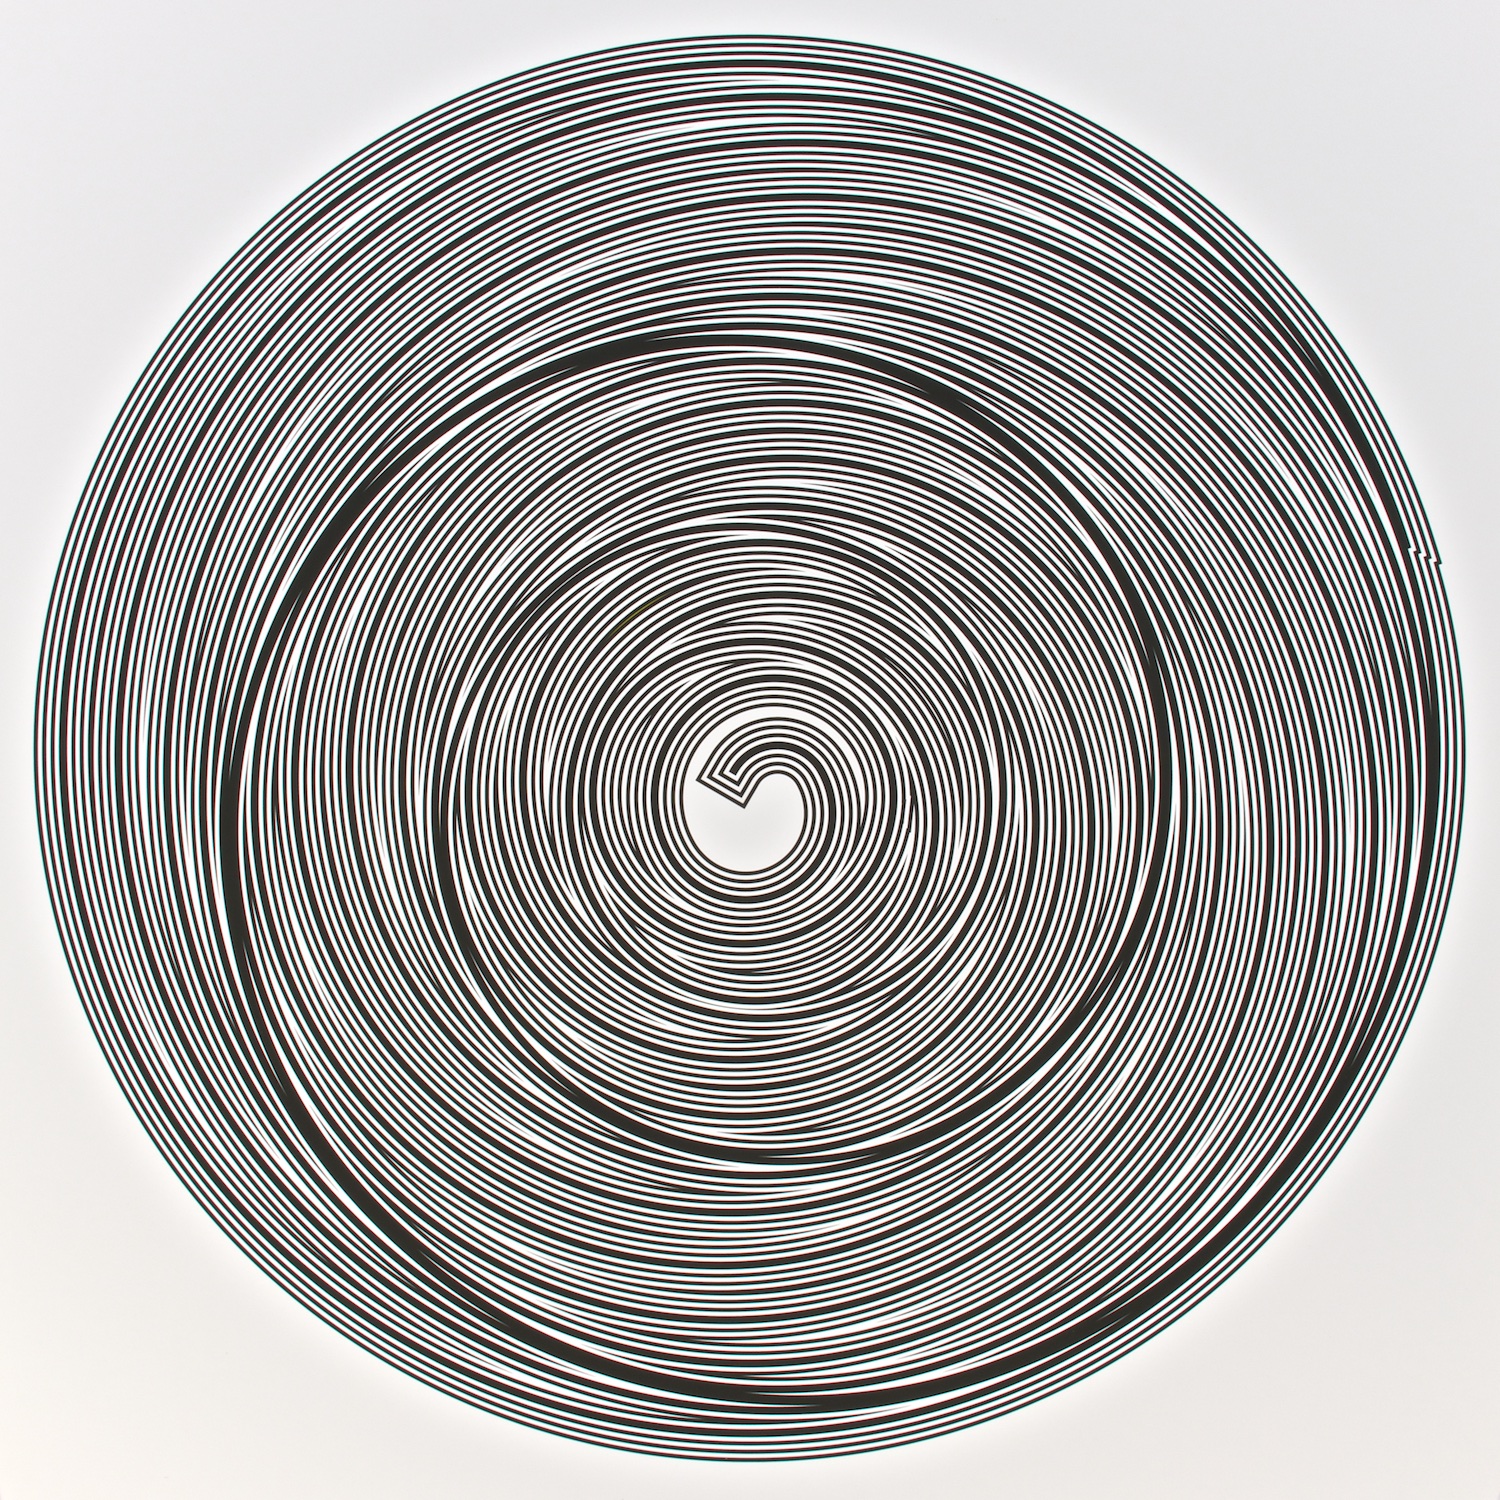   Metagonal Variation 15f ~27~ Central Black Curve Over Composite Black &amp; White Curve  , 2013    Digital drawing, inkjet pigments    Art: 22.5” x 22.5” (57x57 cm)    Paper: 25” x 24” Epson UltraSmooth Fine Art Paper  